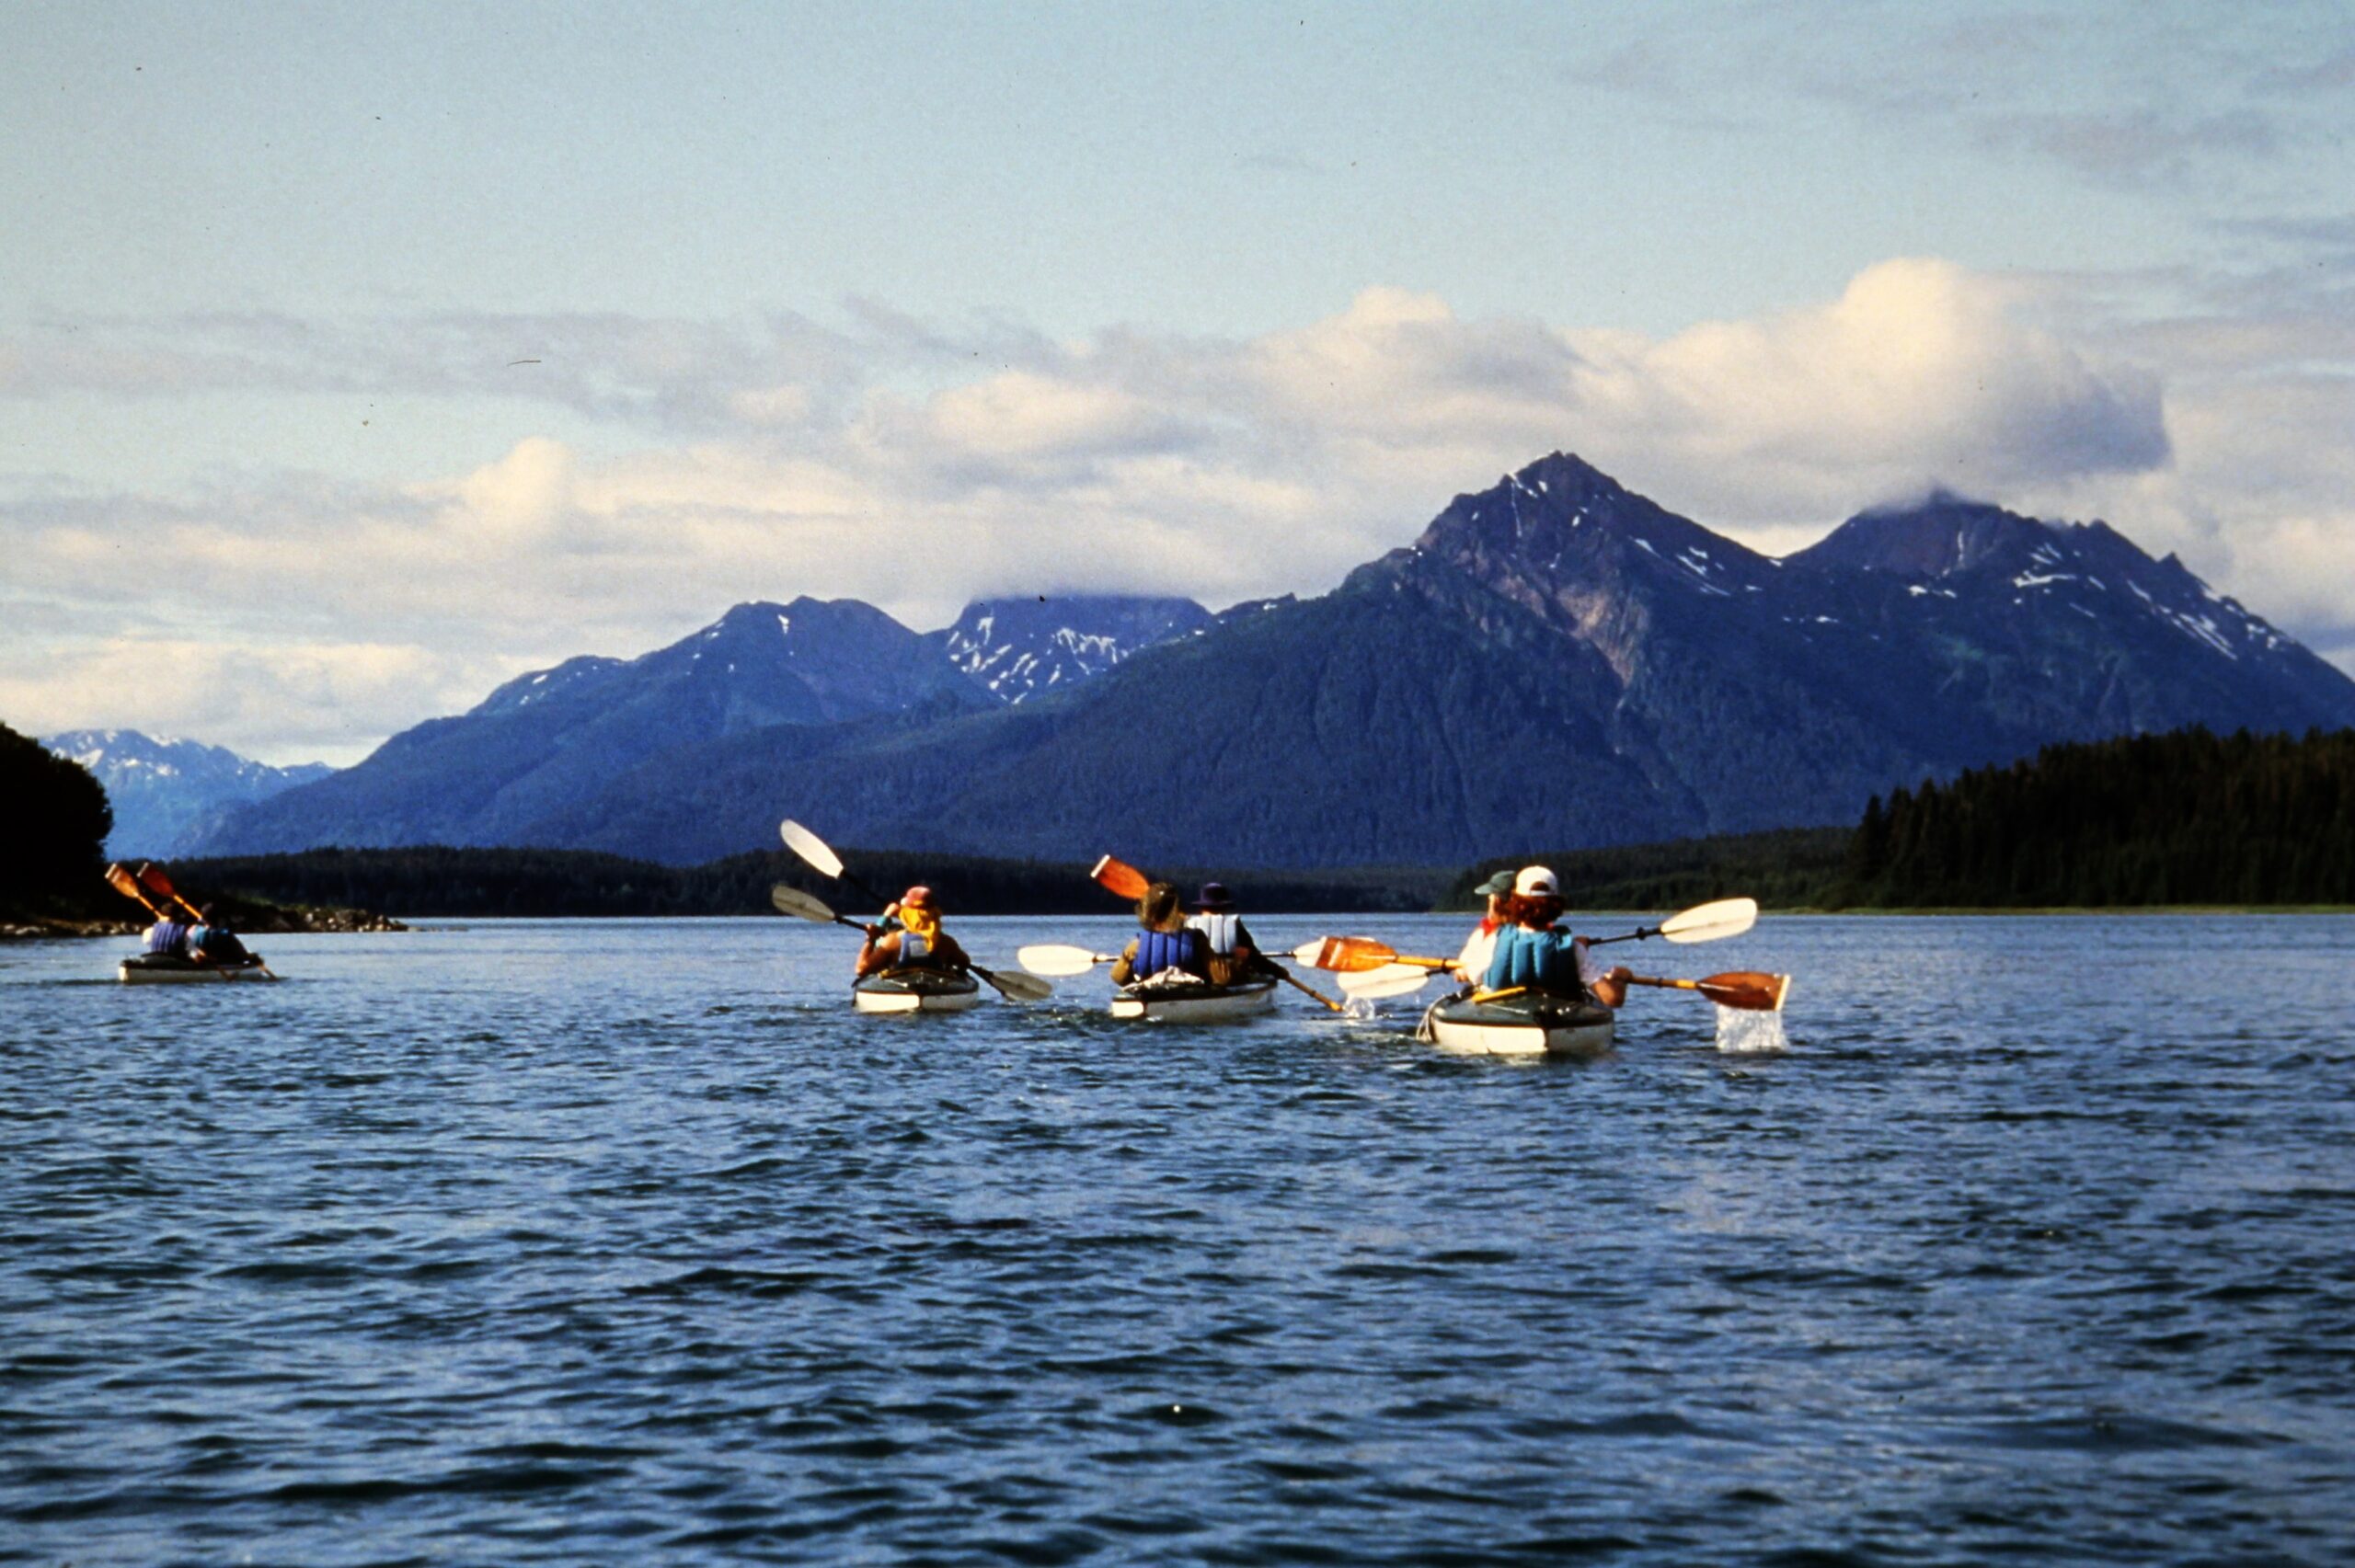 1992 4 sea kayaks